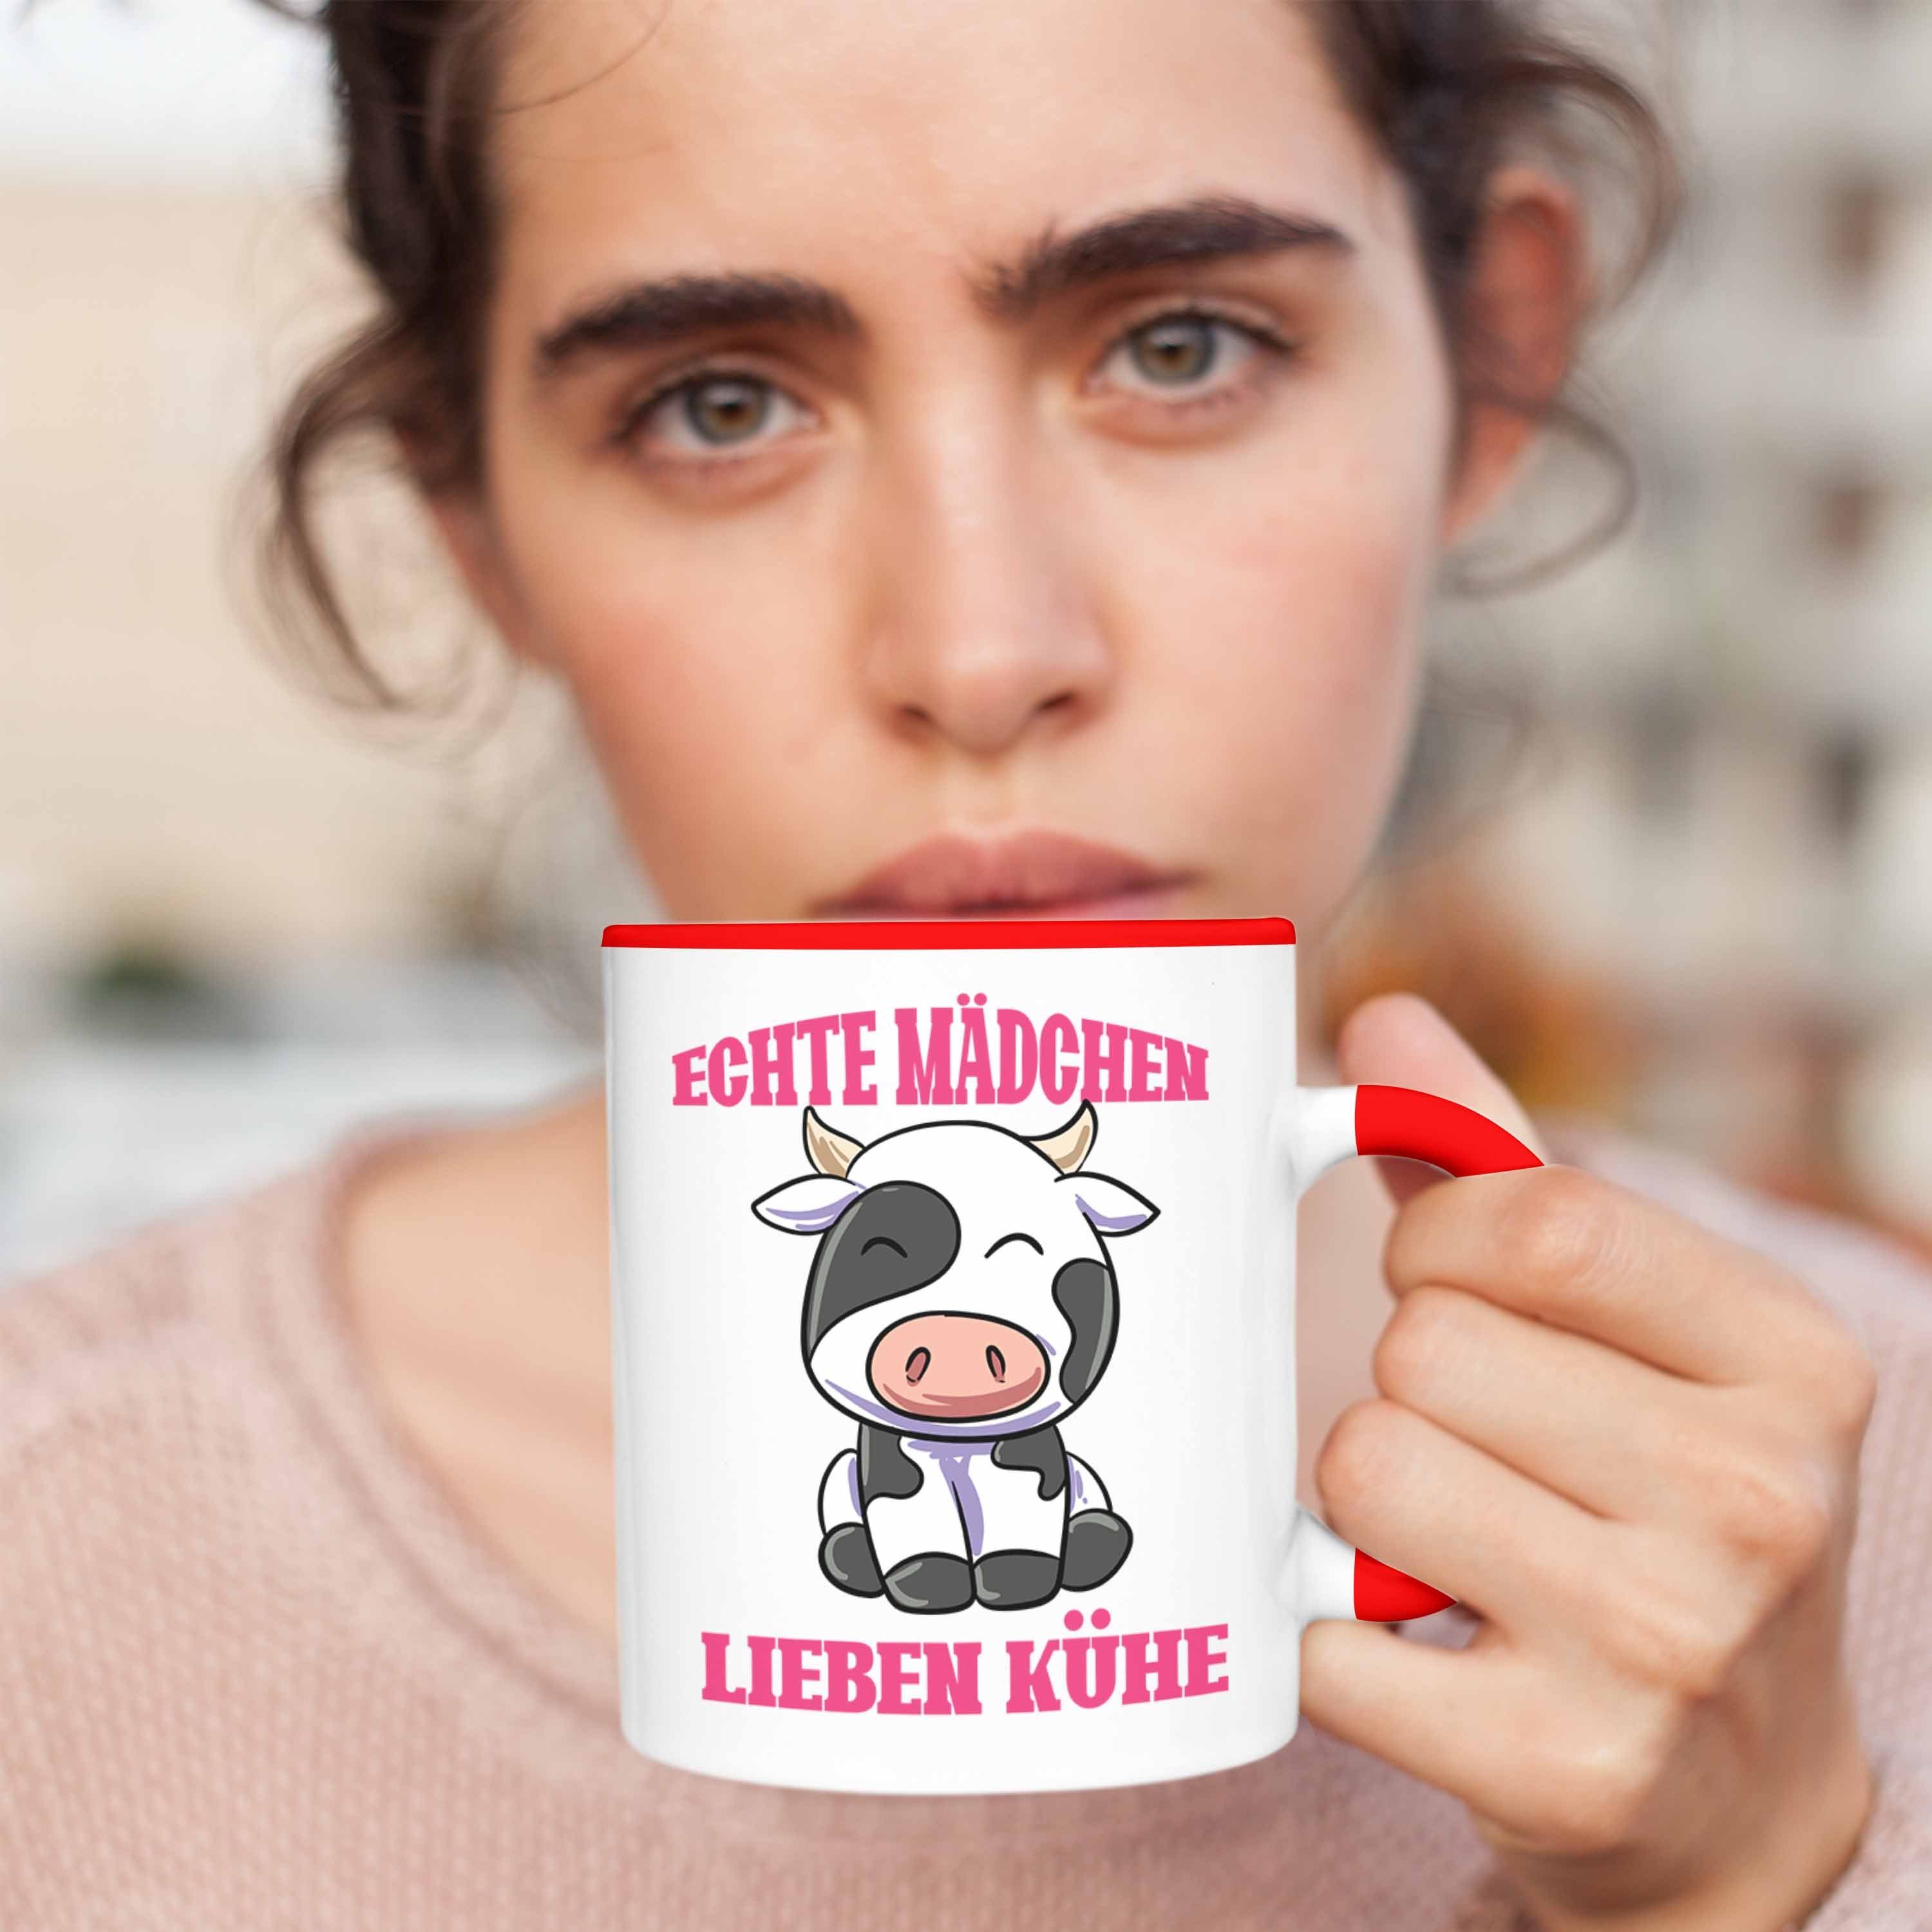 Tasse Geschenk Echte Gesch Bäuerin Kühe Tasse Trendation Lieben Rot Kuh Landwirtin Mädchen